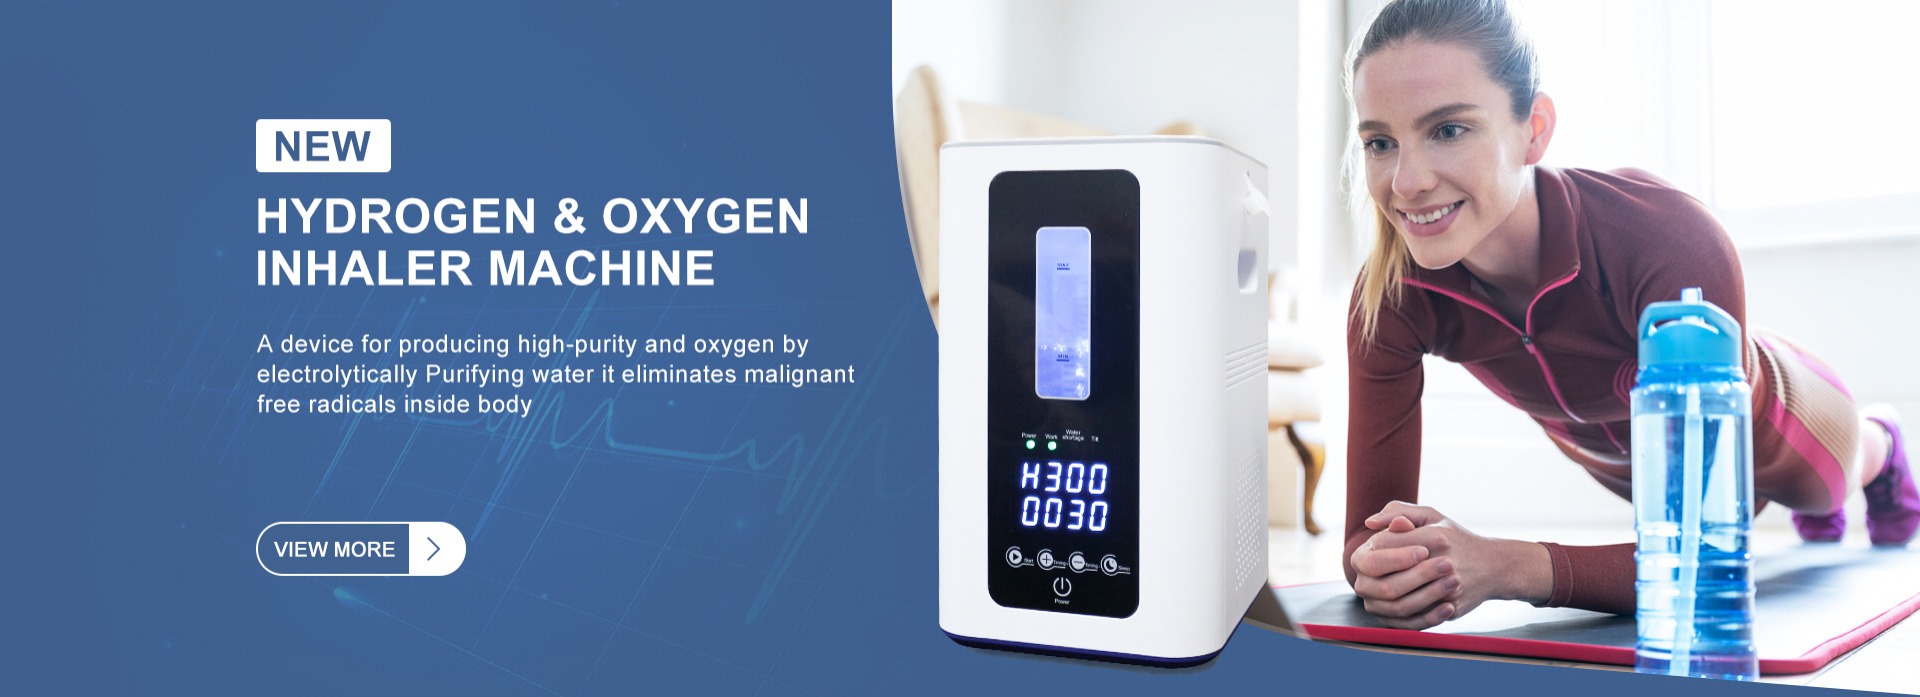 máquina de inhalador de hidrógeno